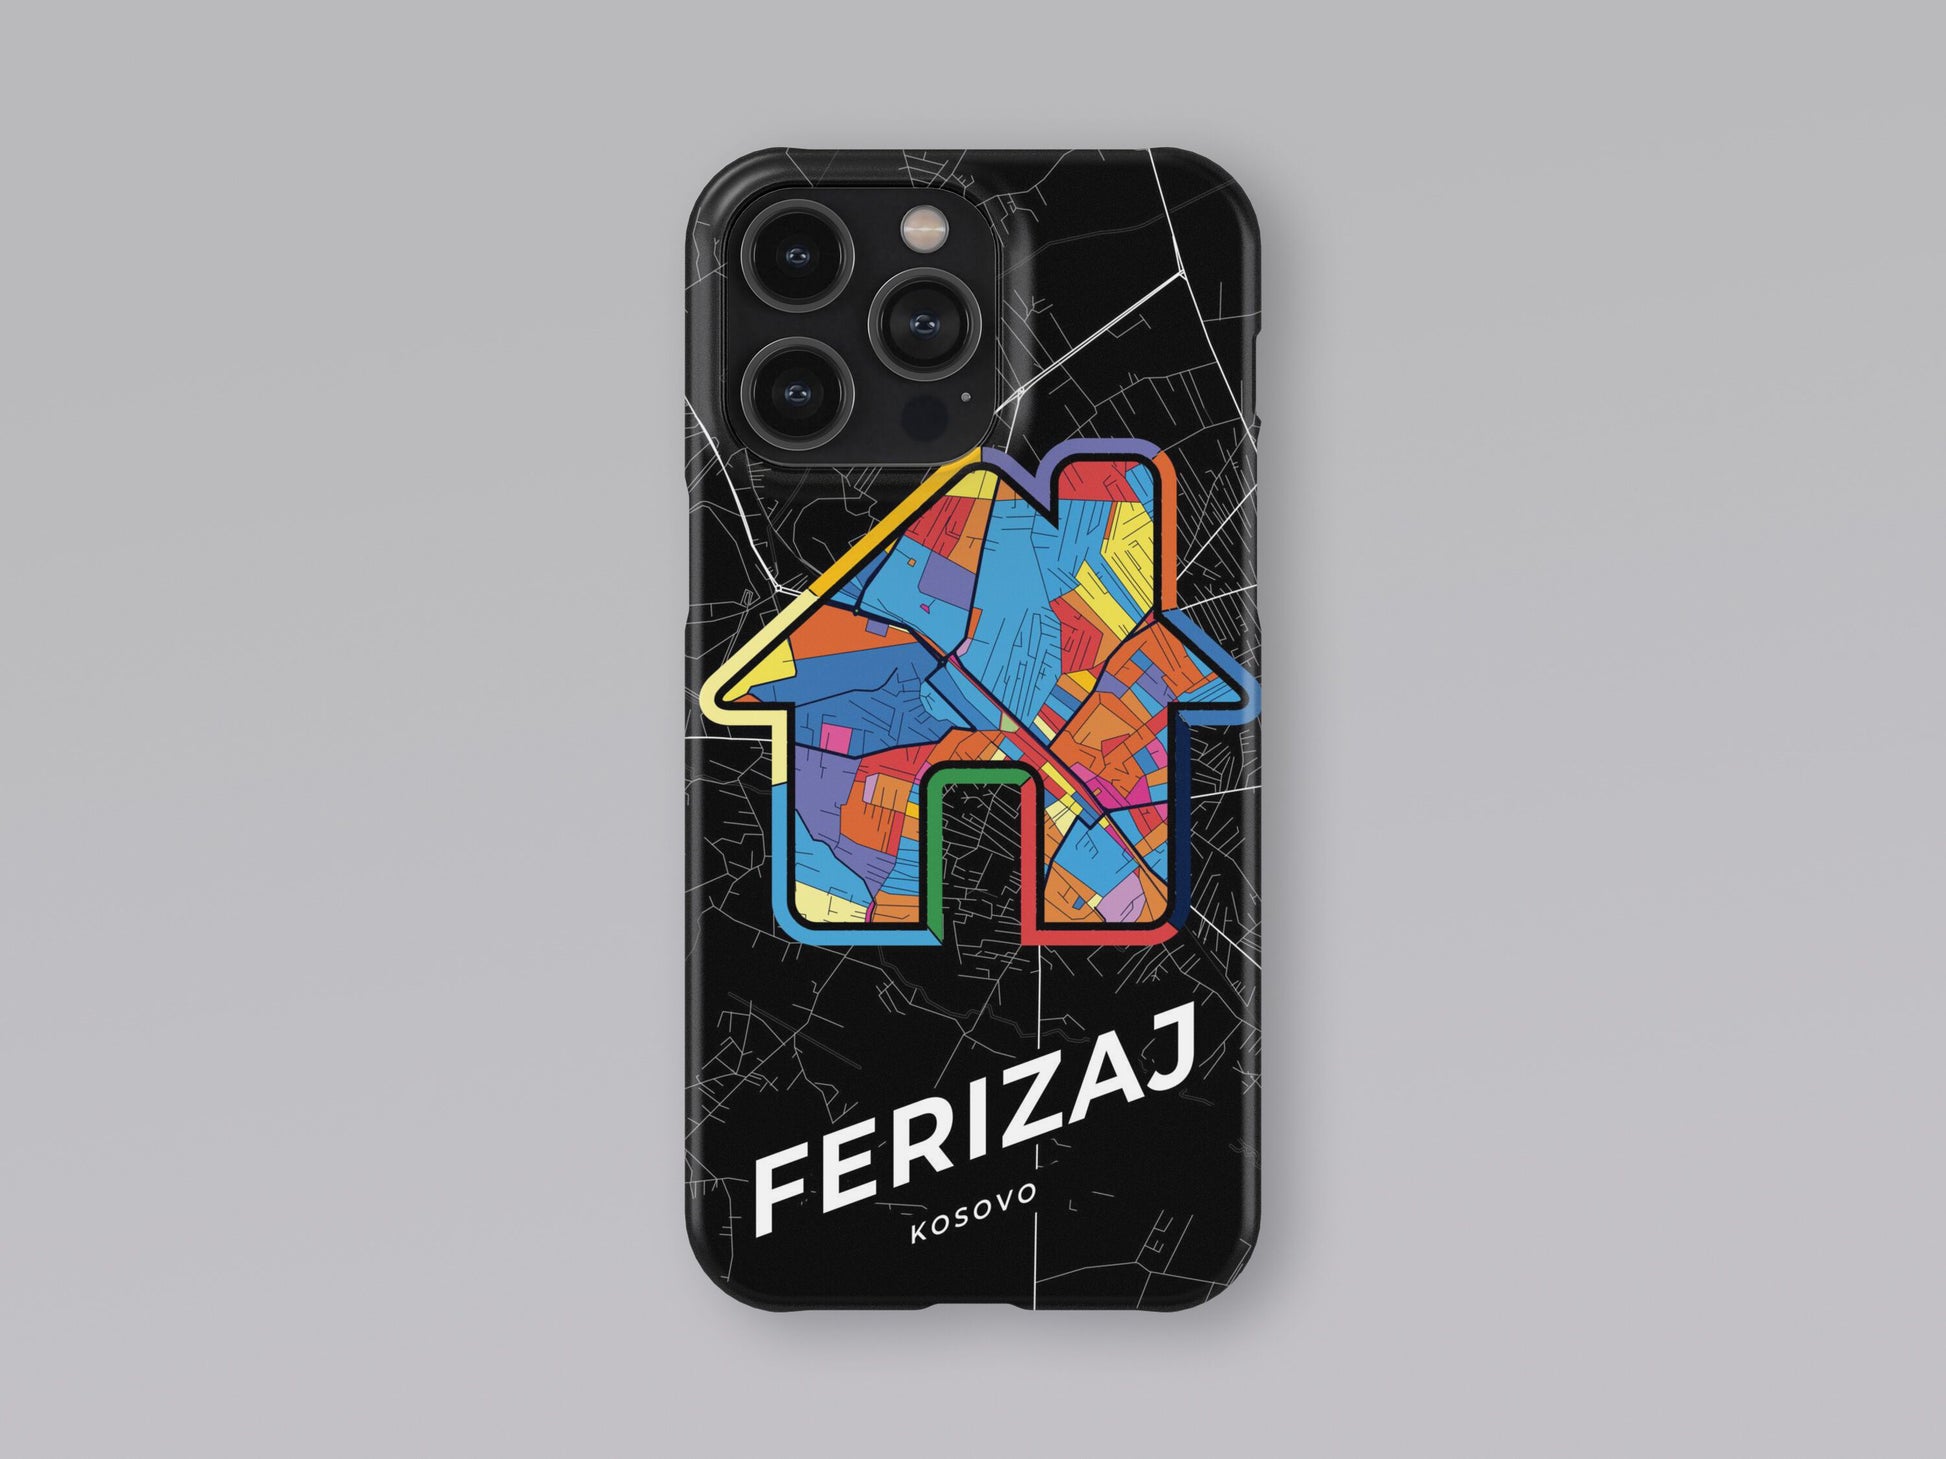 Ferizaj / Uroševac Kosovo slim phone case with colorful icon. Birthday, wedding or housewarming gift. Couple match cases. 3